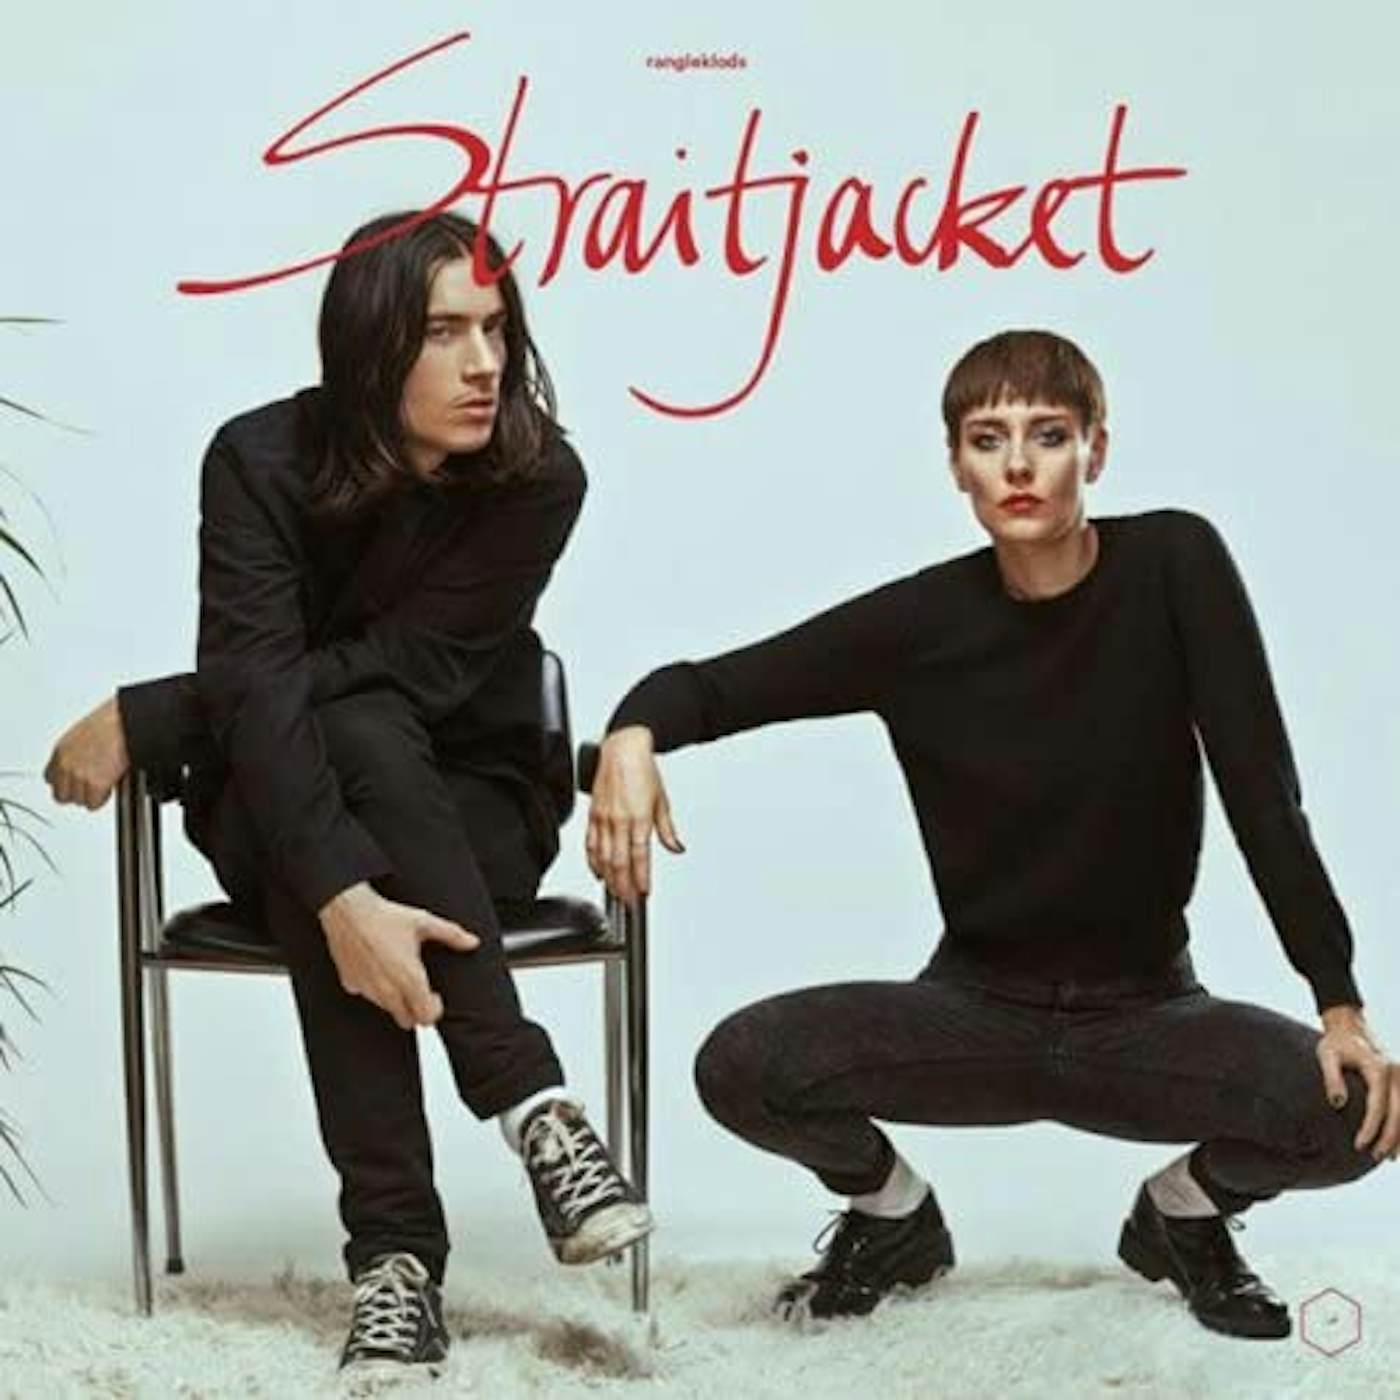 Rangleklods Straitjacket Vinyl Record